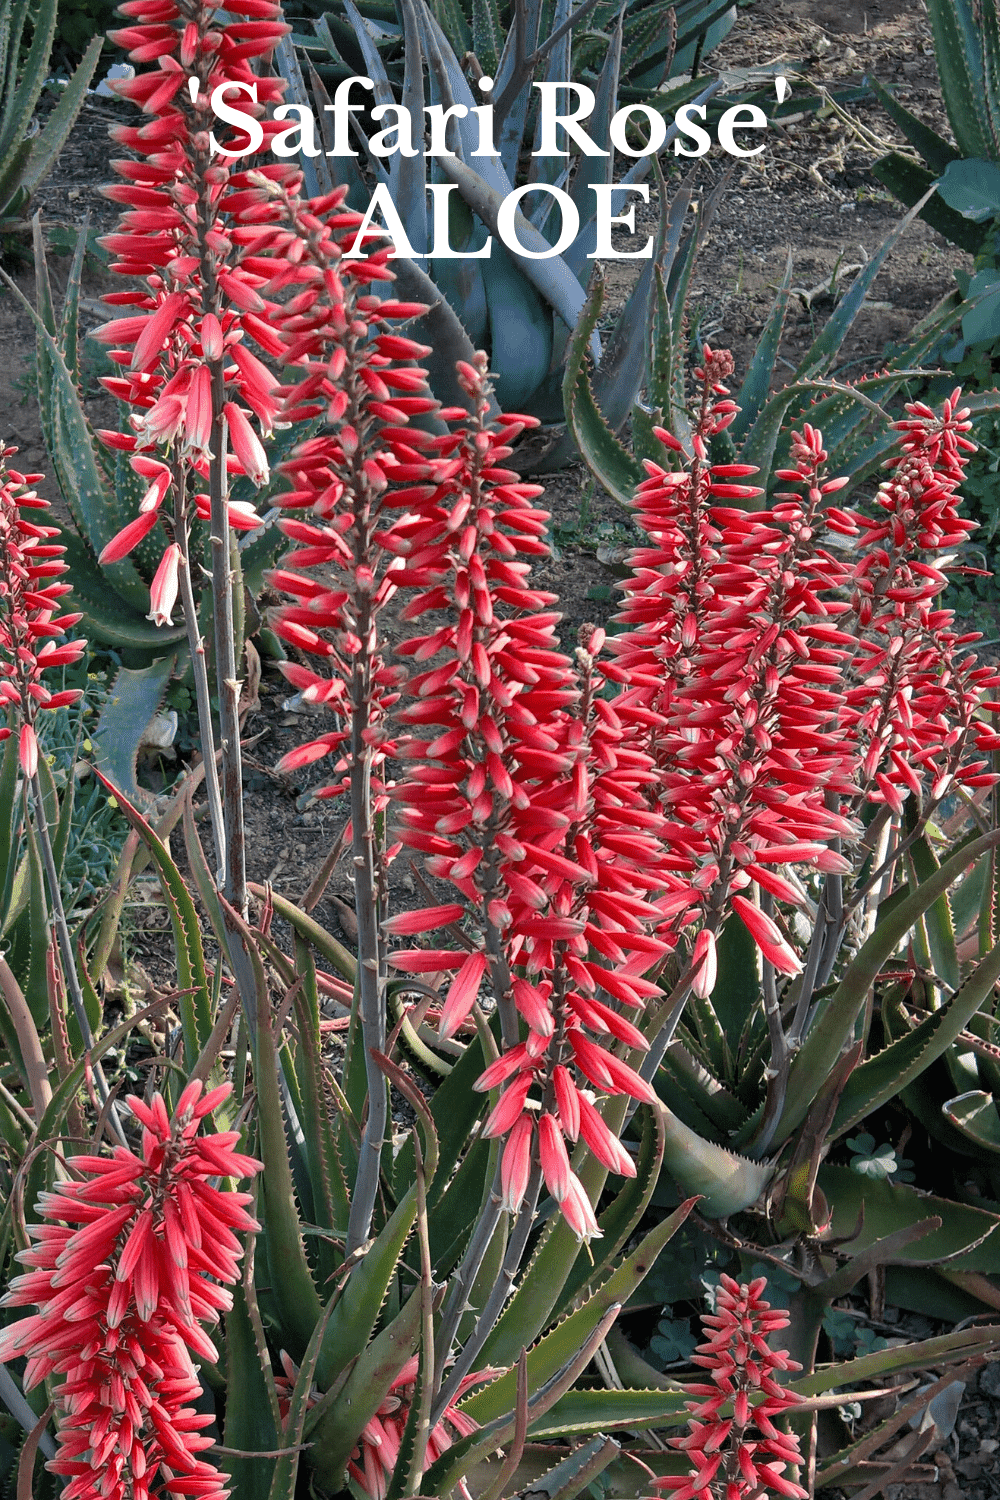 'Safari Rose' Aloe - Southern Living Plants